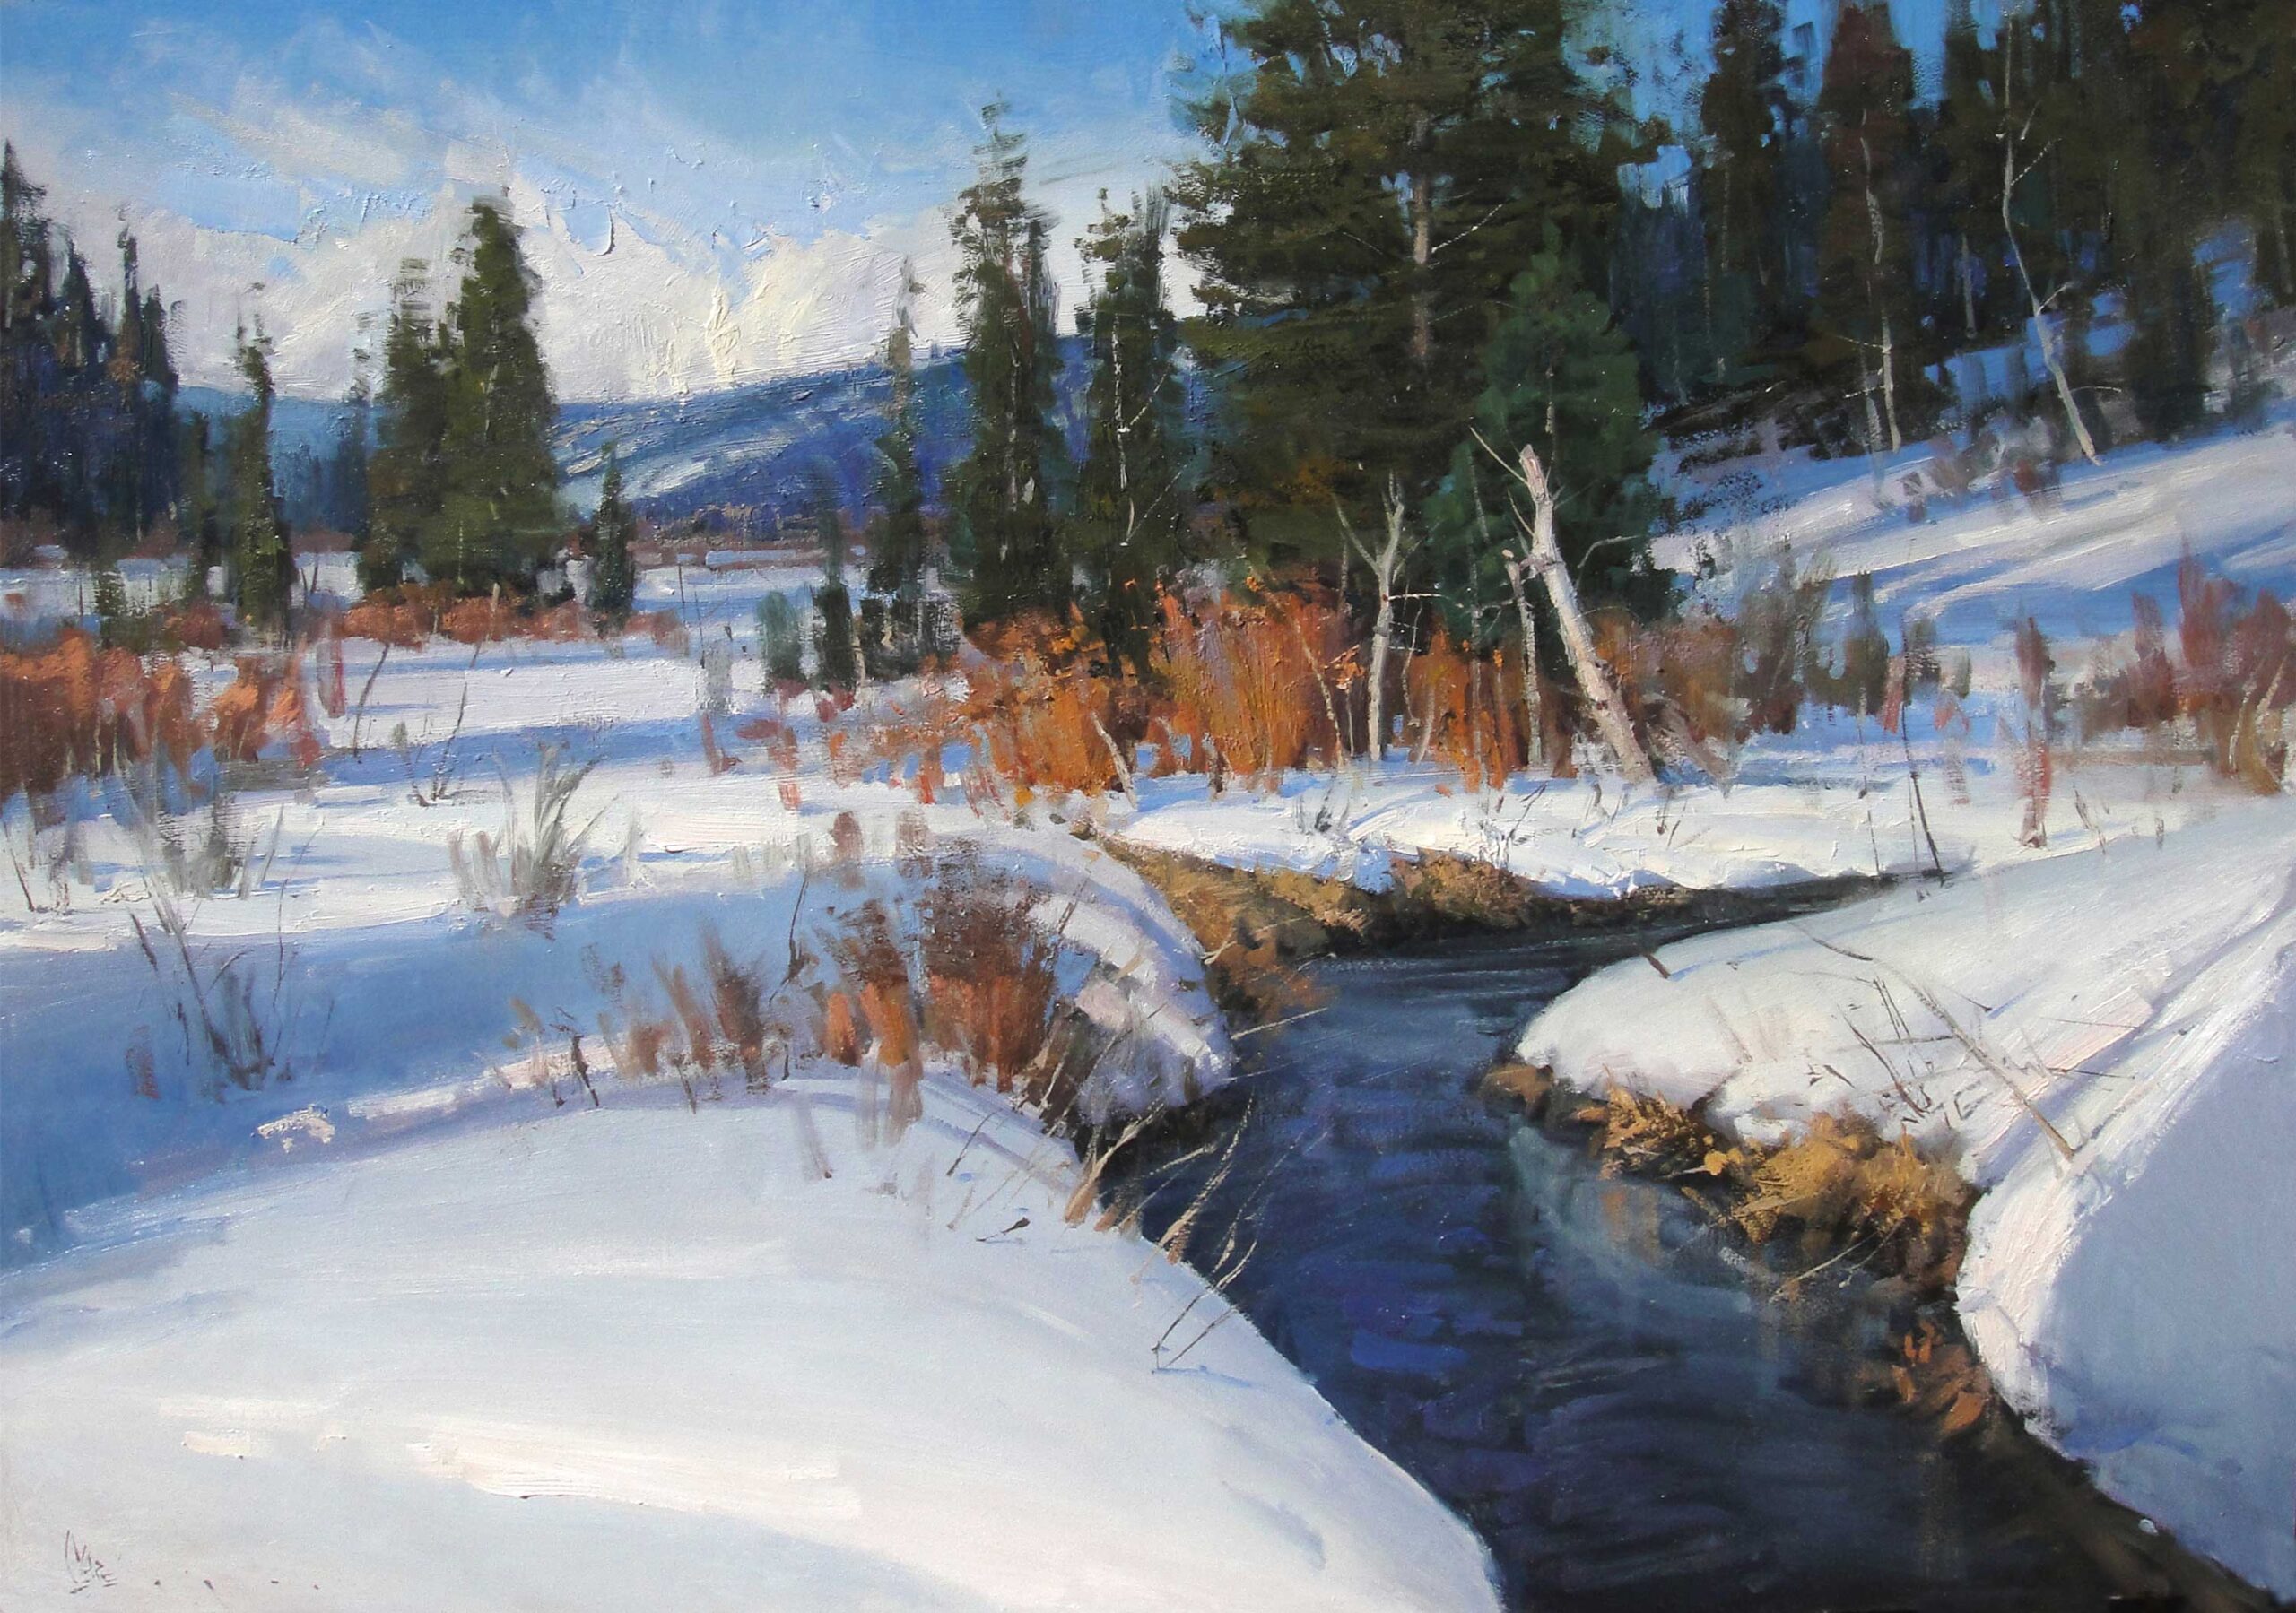 Josh Clare, "Teton Pass," 30 x 40 inches, oil on linen